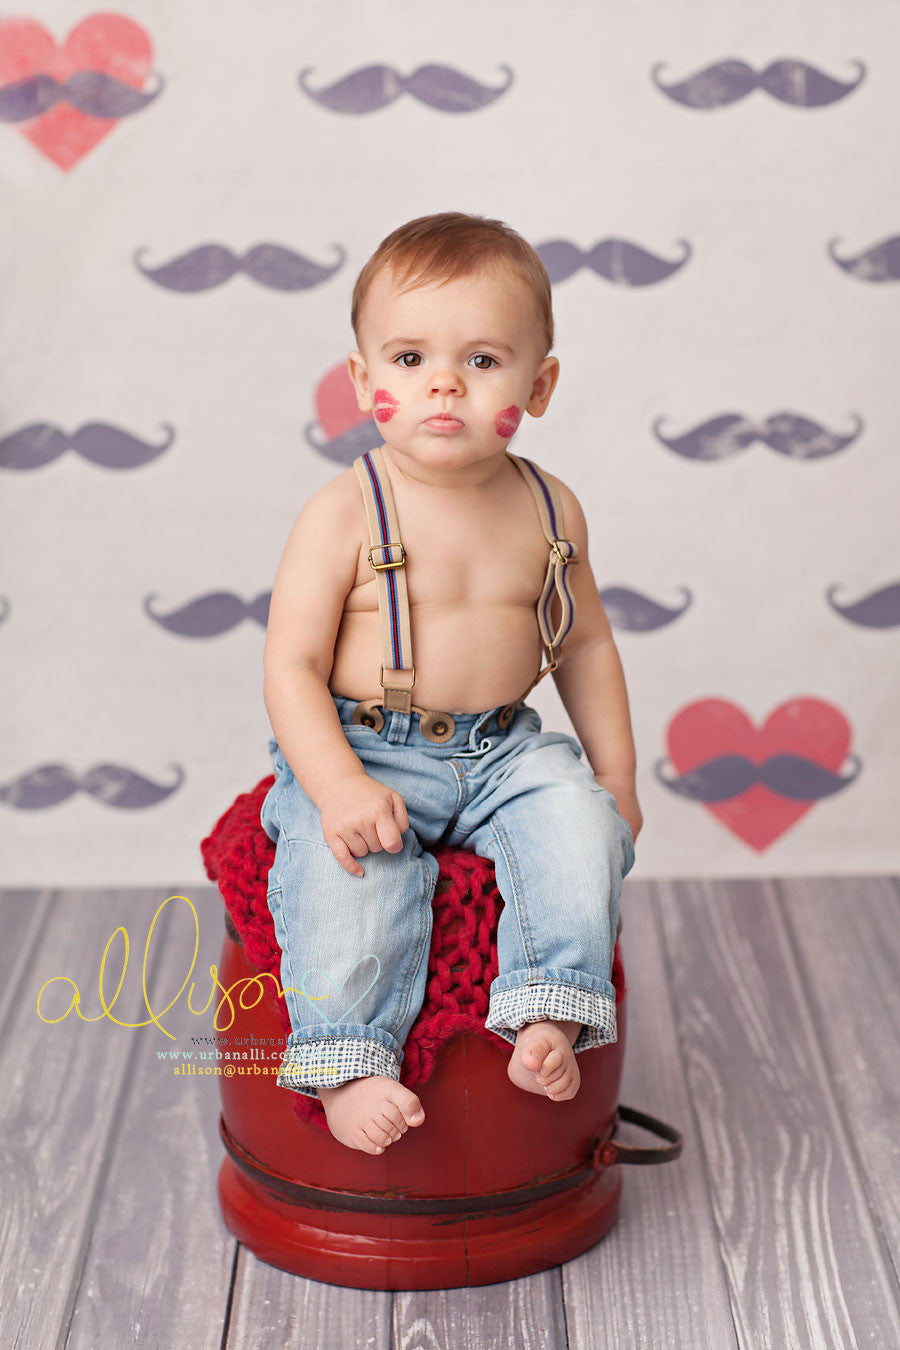 Mustache Hearts - HSD Photography Backdrops 